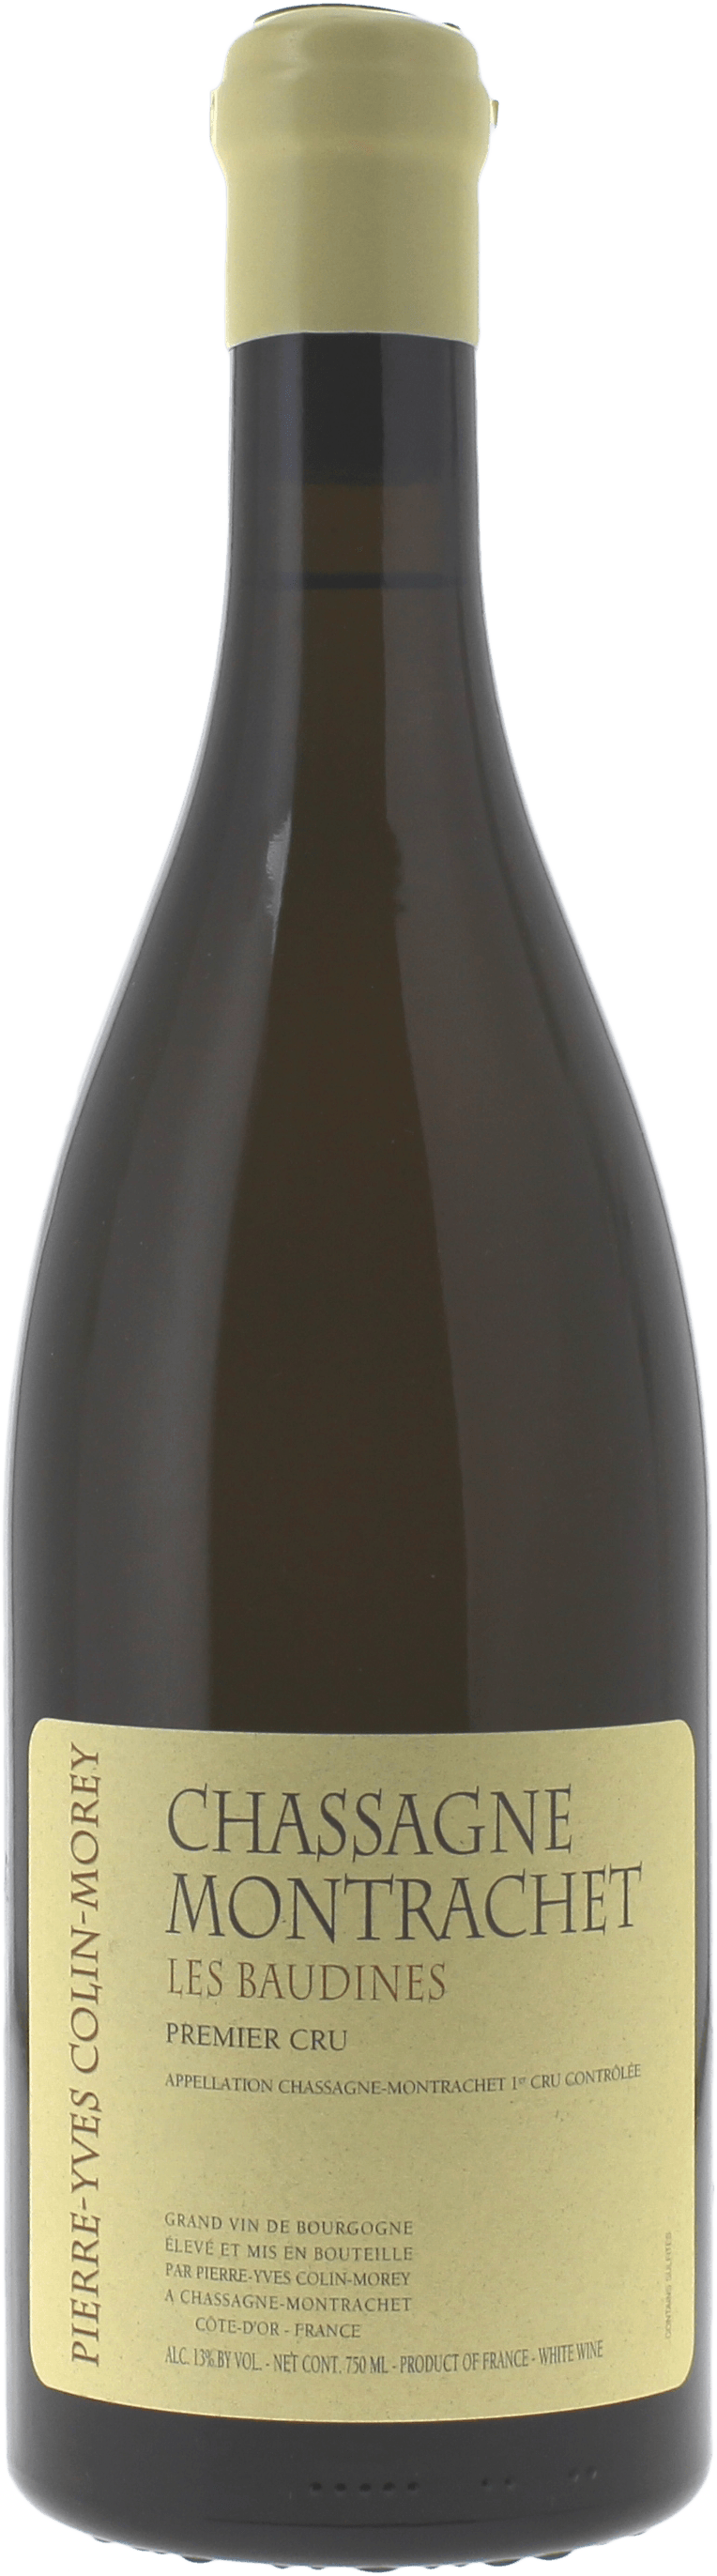 Chassagne montrachet 1er cru baudines 2015 Domaine COLIN MOREY, Bourgogne blanc